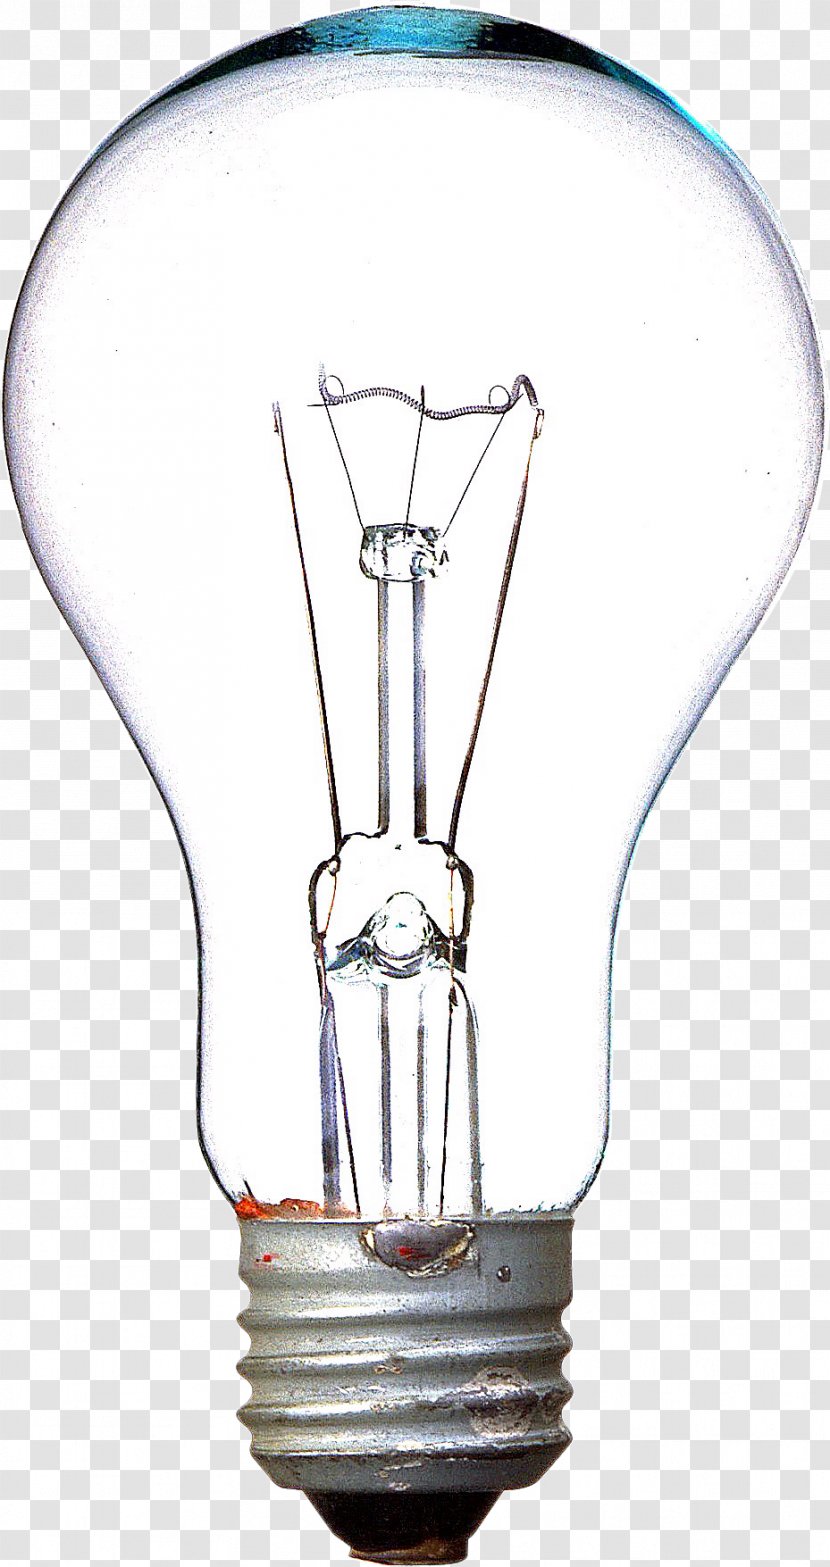 Incandescent Light Bulb Lamp Icon - Image Transparent PNG